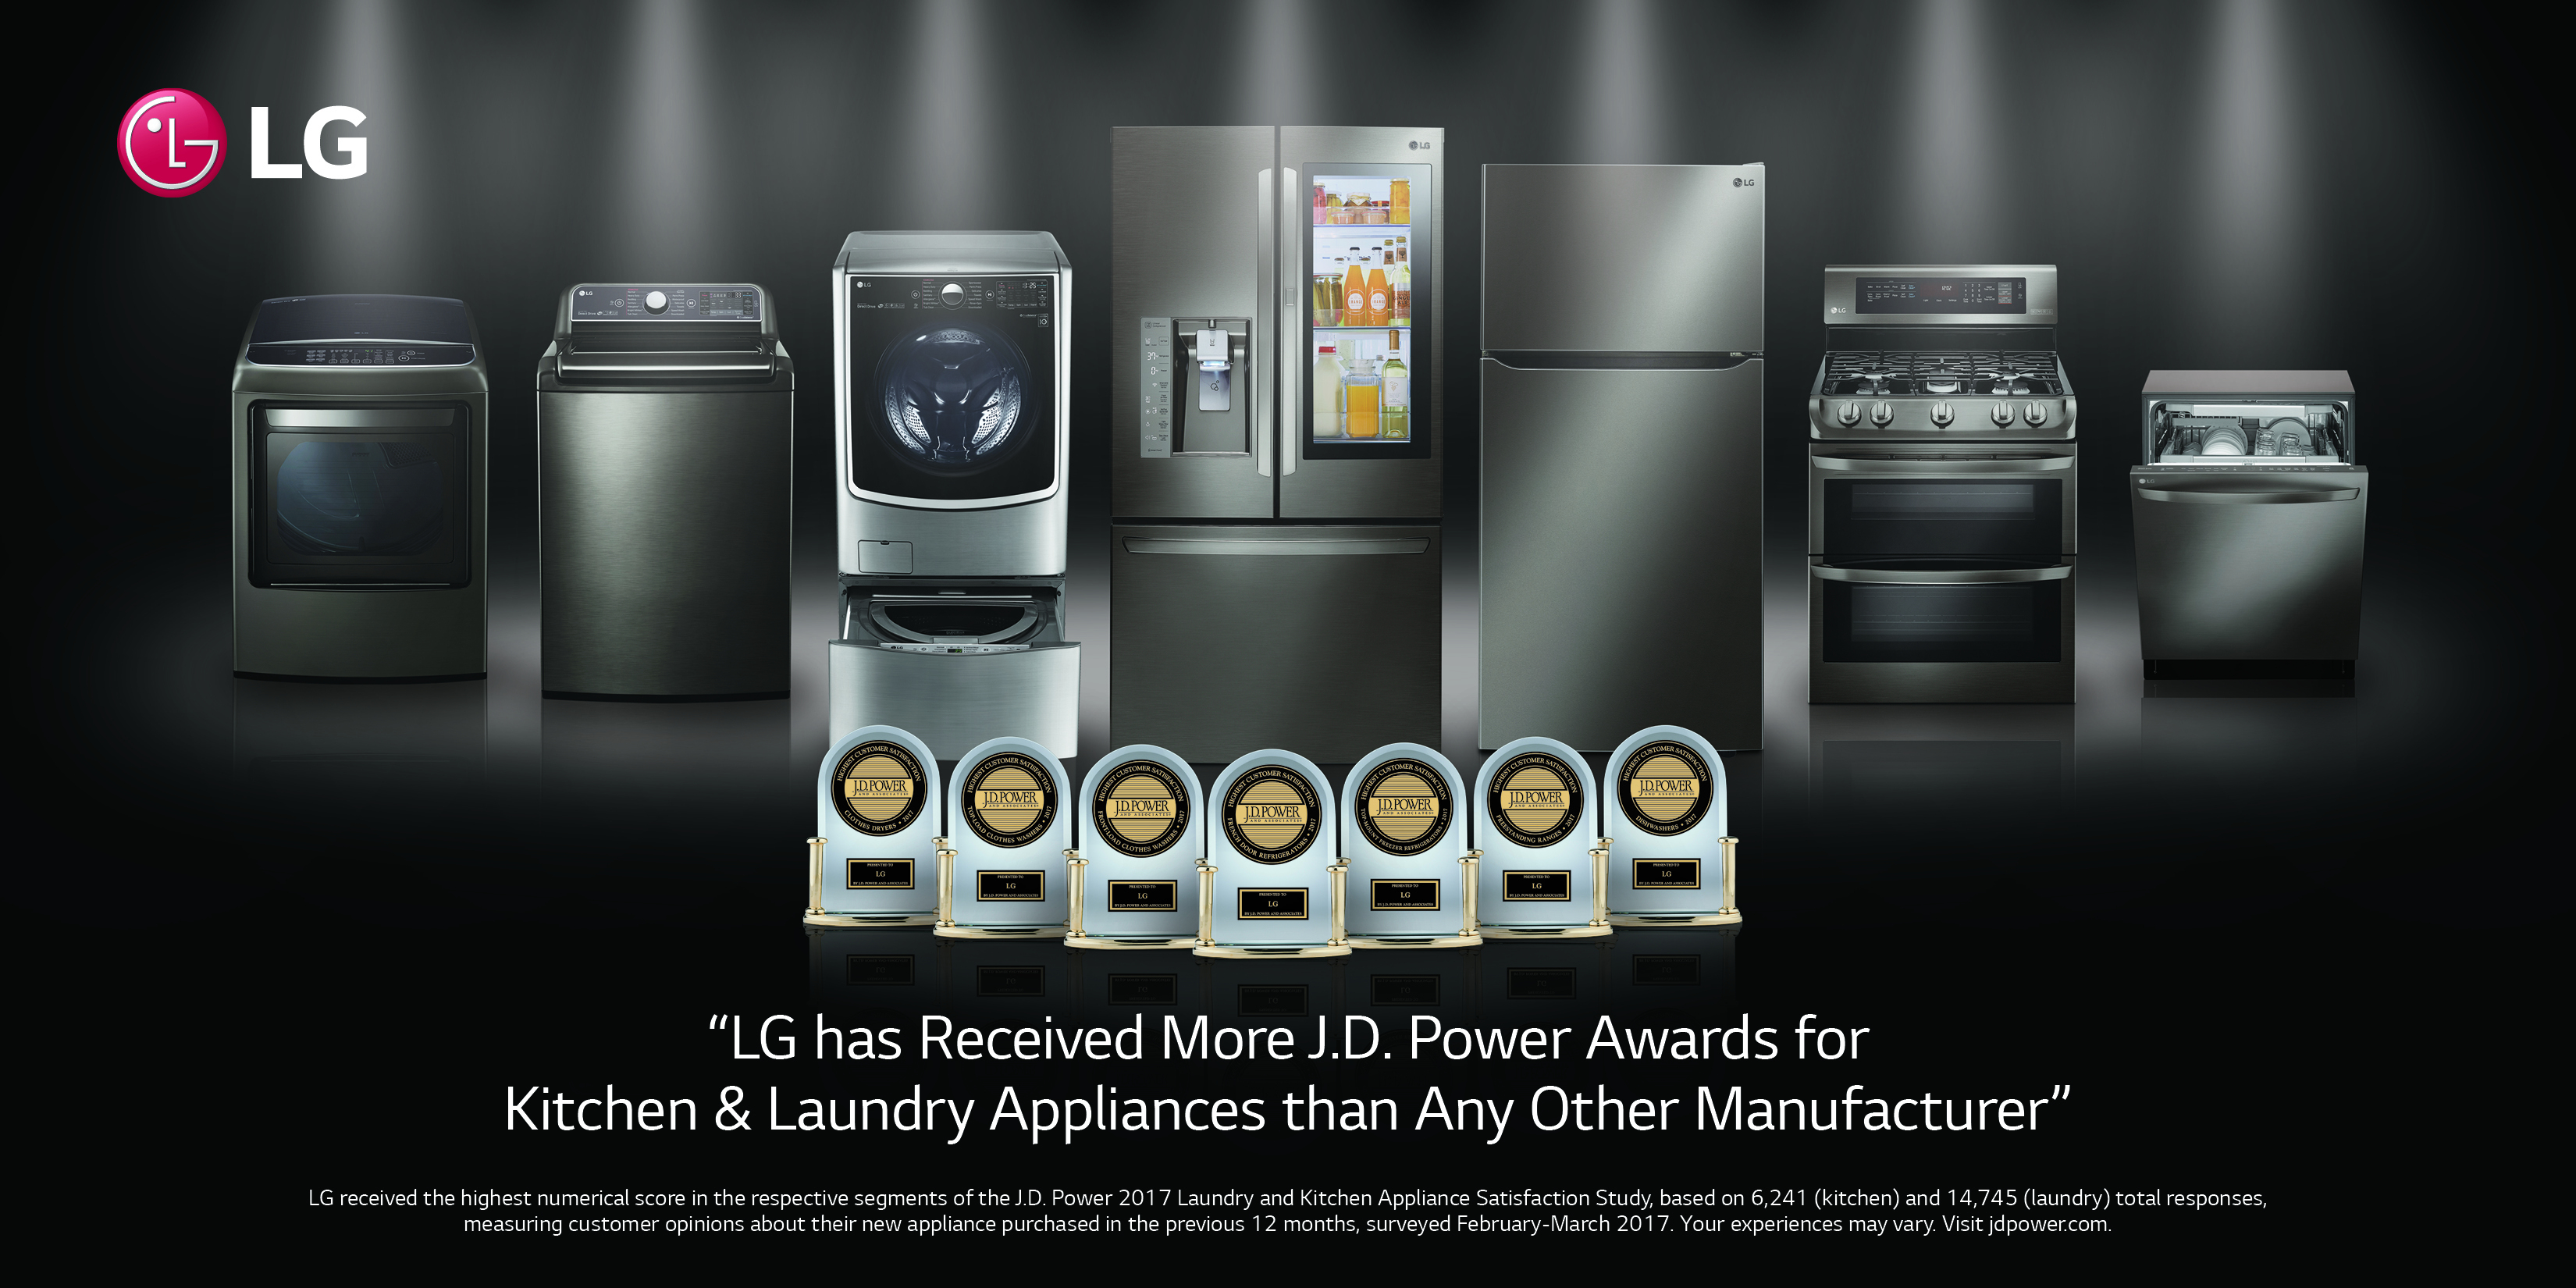 LG Tops J.D. Power’s Appliance Satisfaction Surveys in 7 Categories